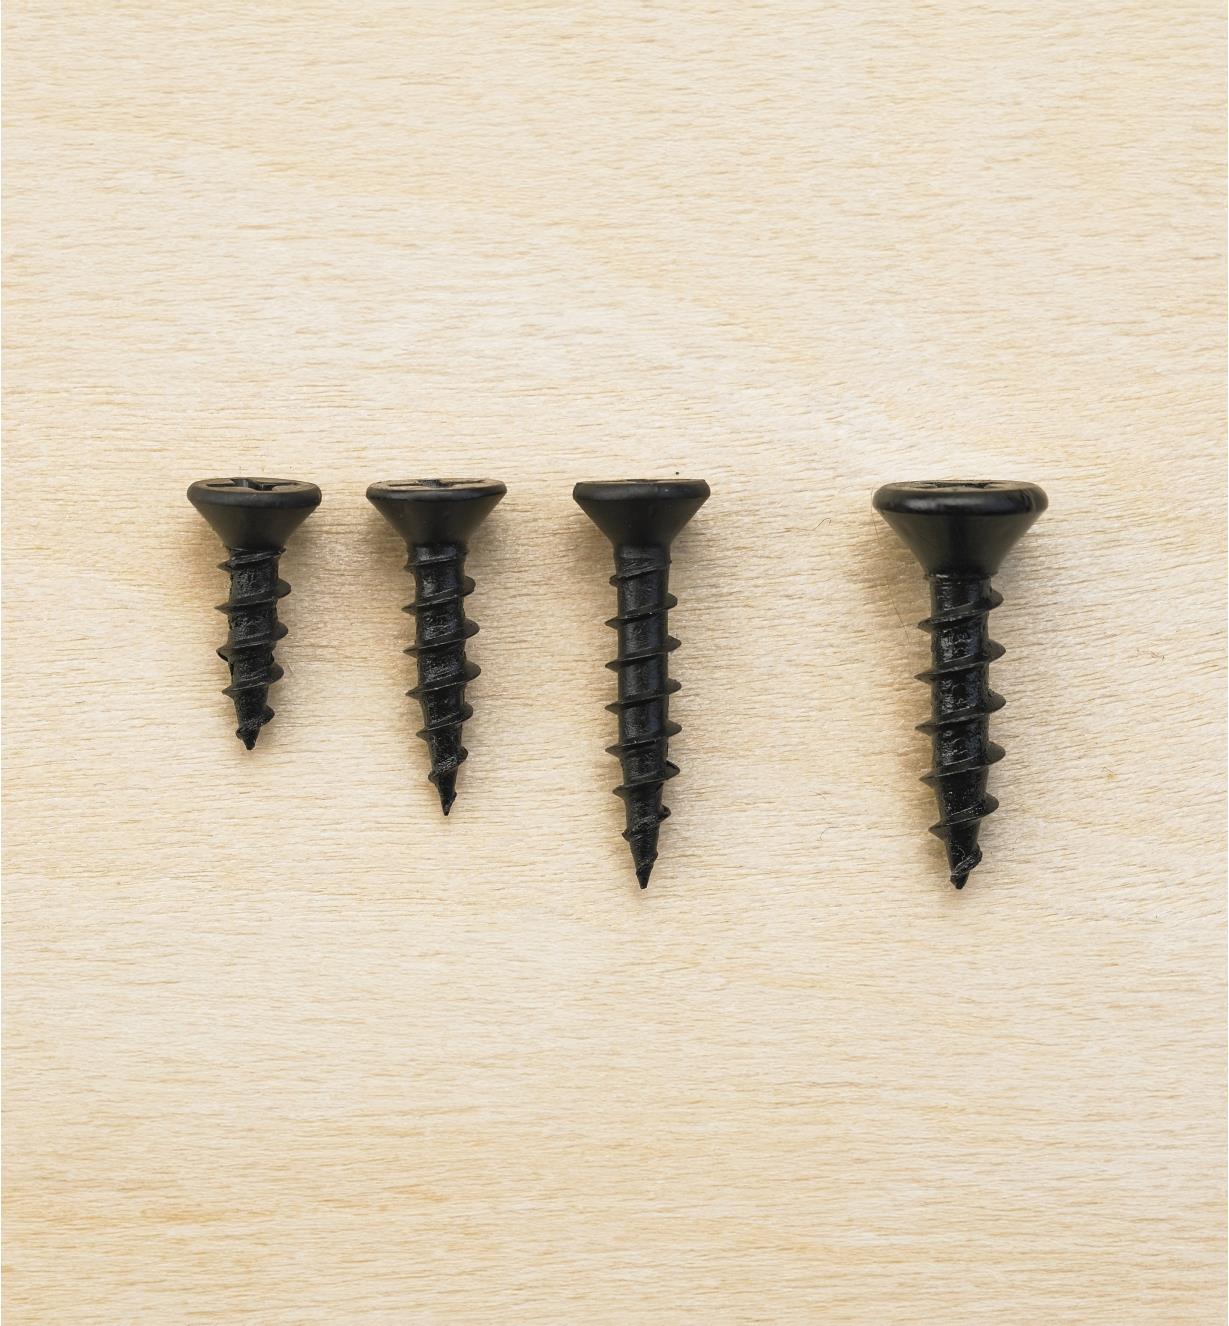 Flat-Head Black Steel Screws